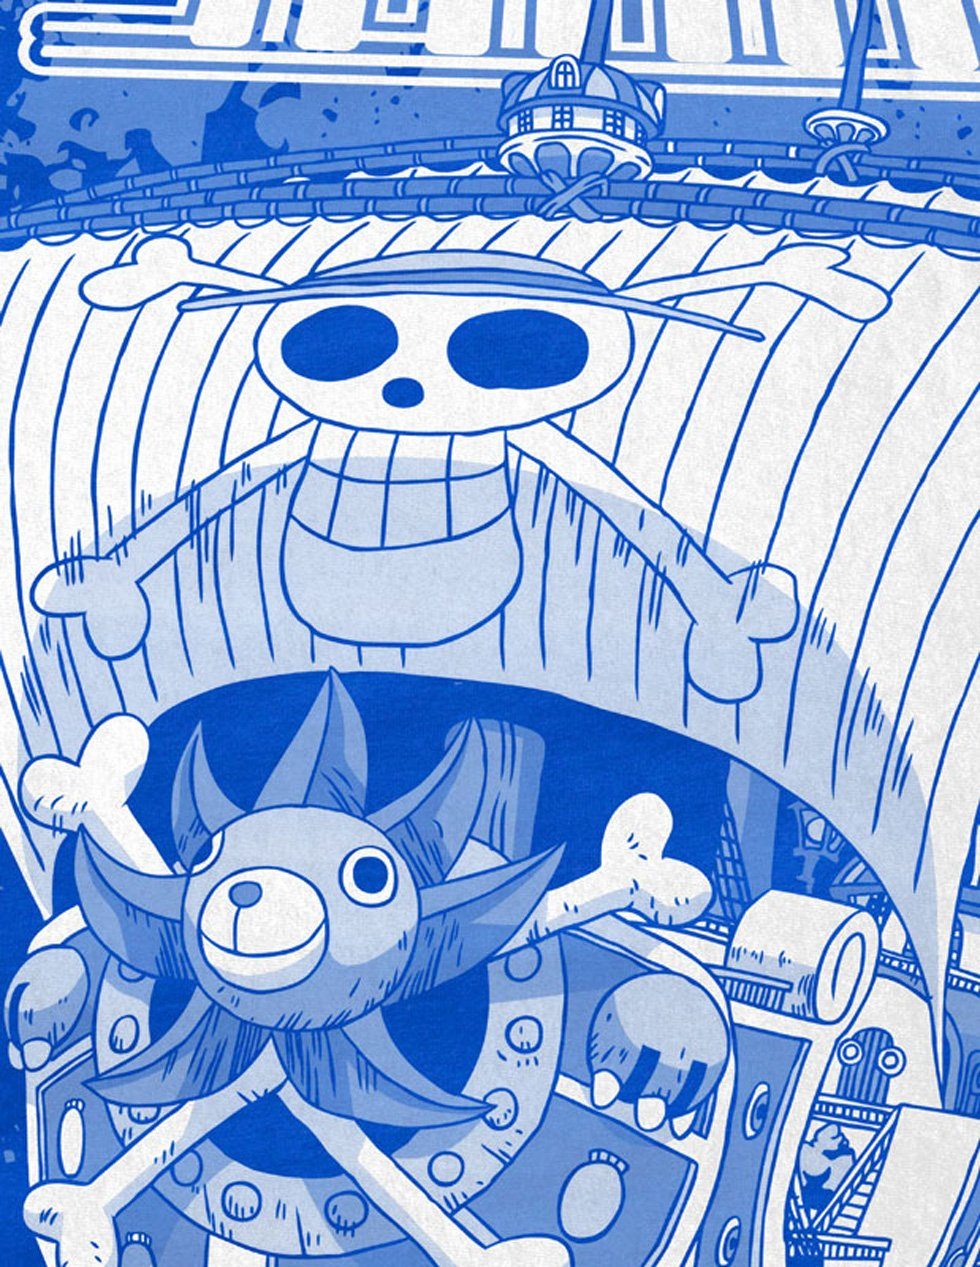 blau style3 japan Herren Print-Shirt Glory Thousand anime T-Shirt Sunny strohhut pirat